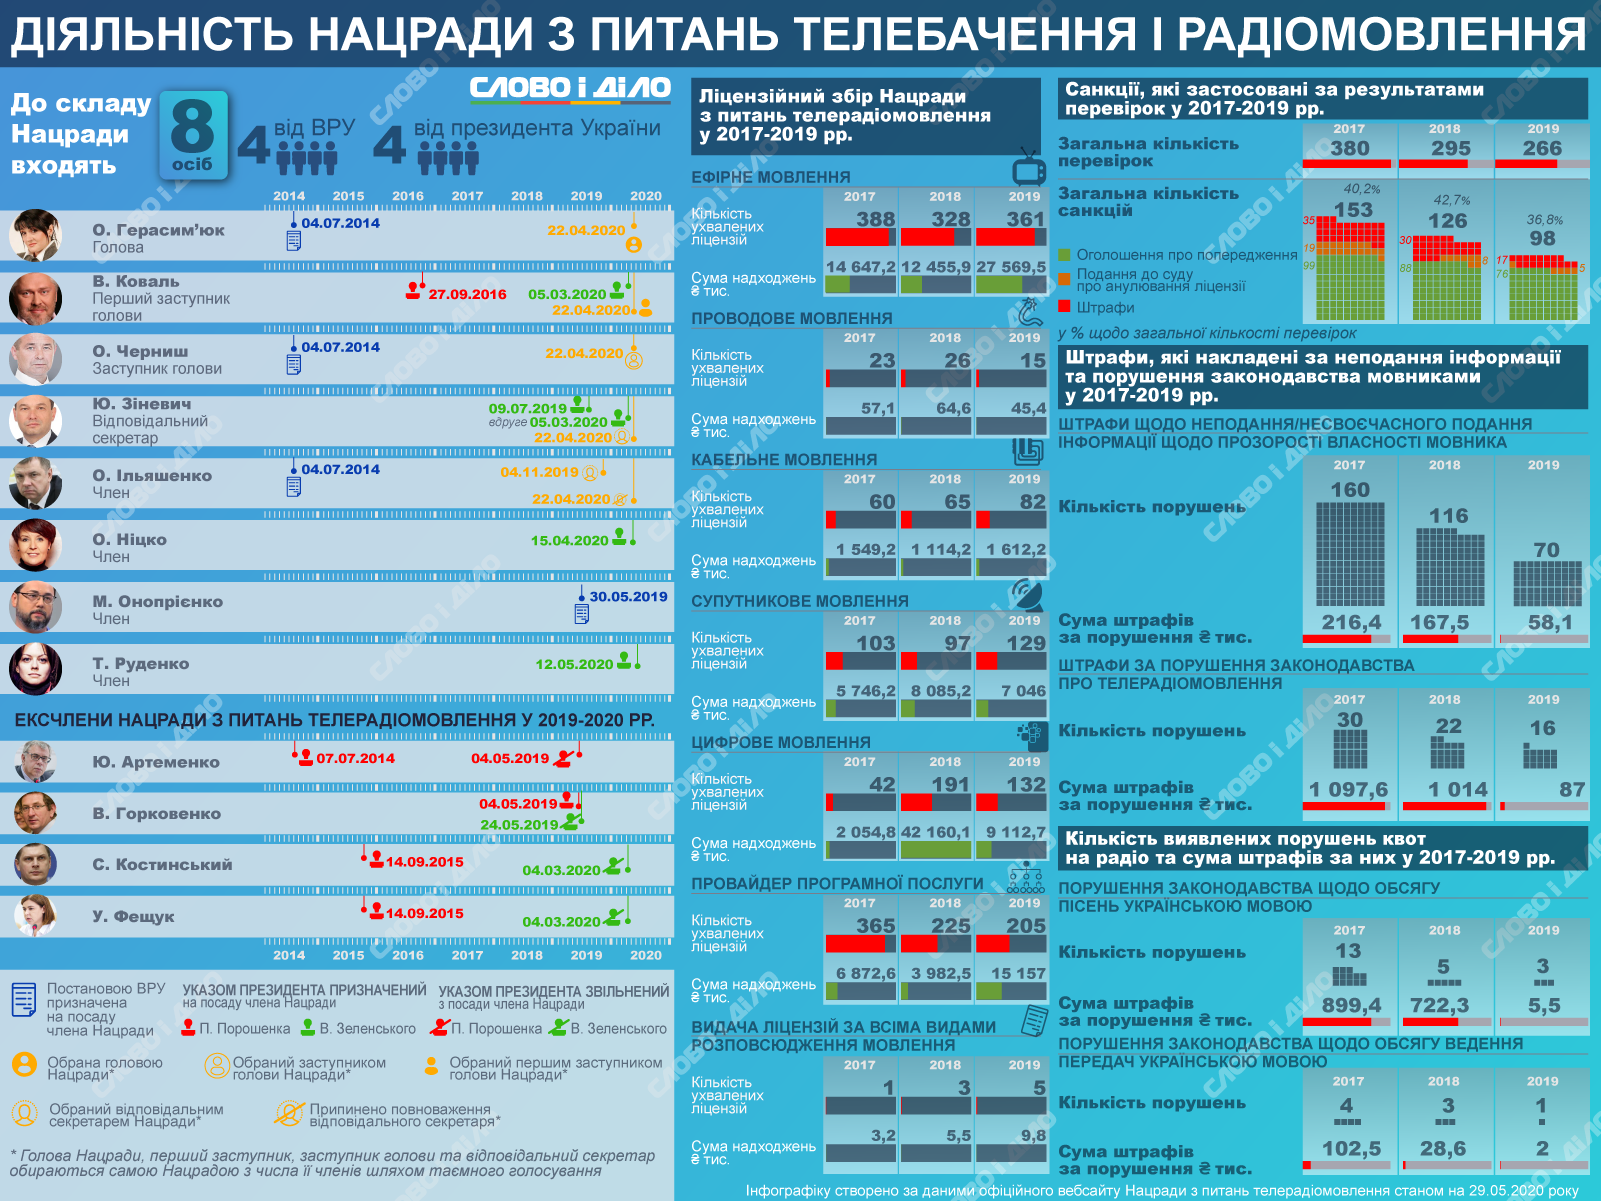 http://media.slovoidilo.ua/media/infographics/12/111872/111872-1_uk_origin.png